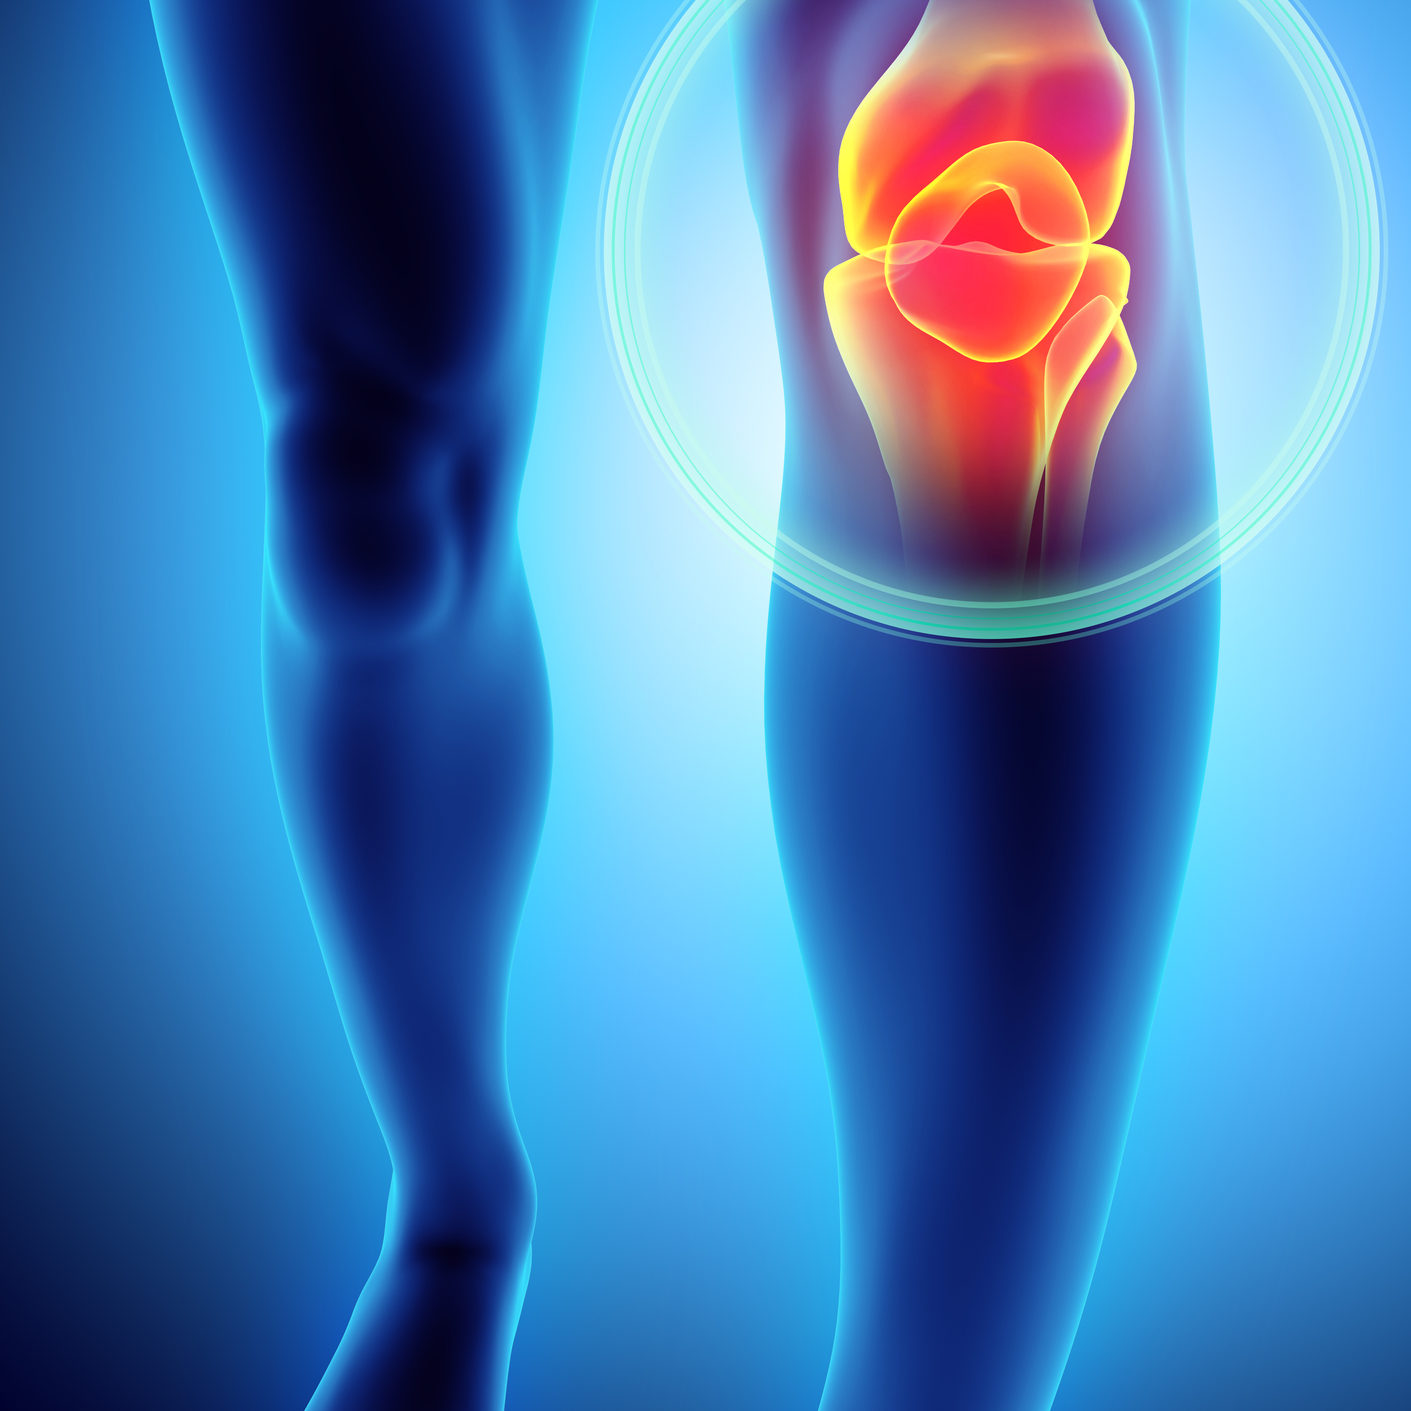 Knee Pain Treatment In Redding